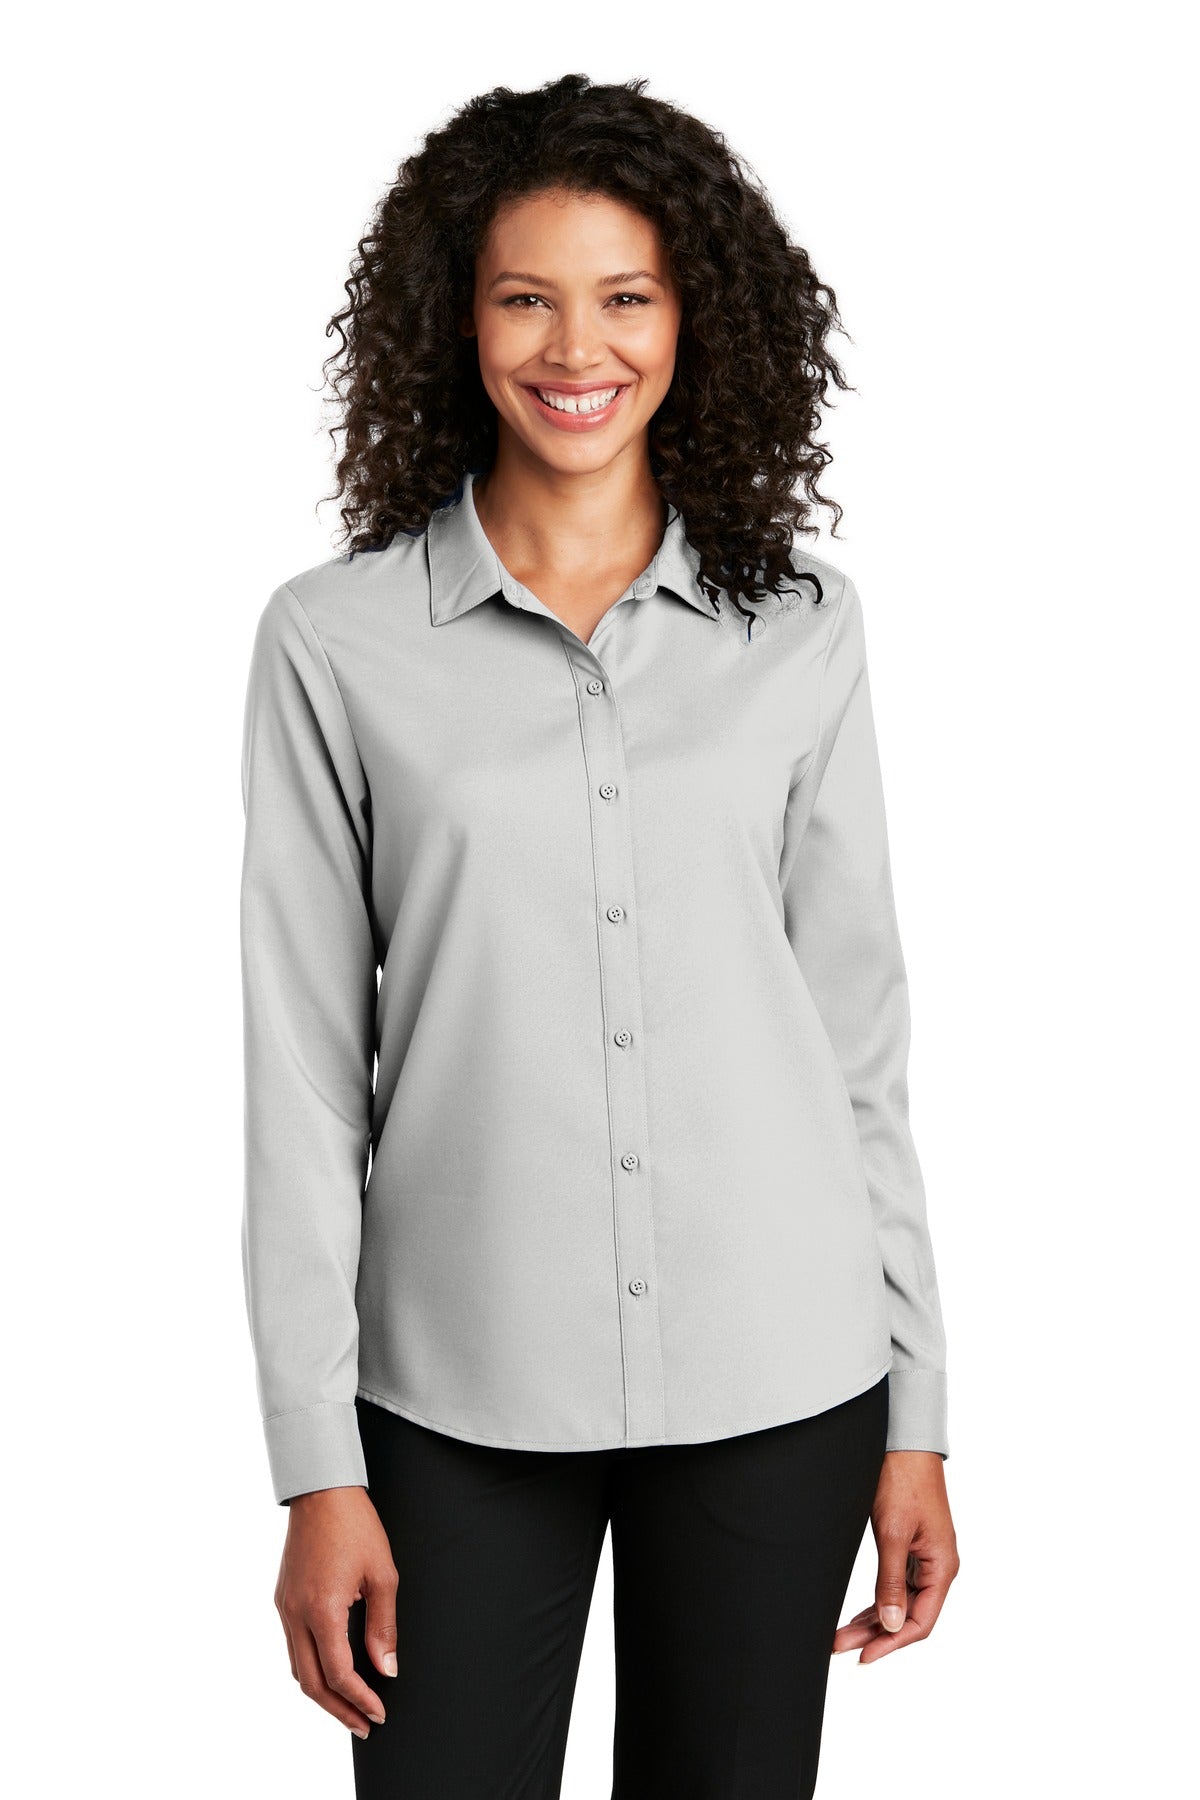 Port Authority Ladies Long Sleeve Performance Staff Shirt LW401